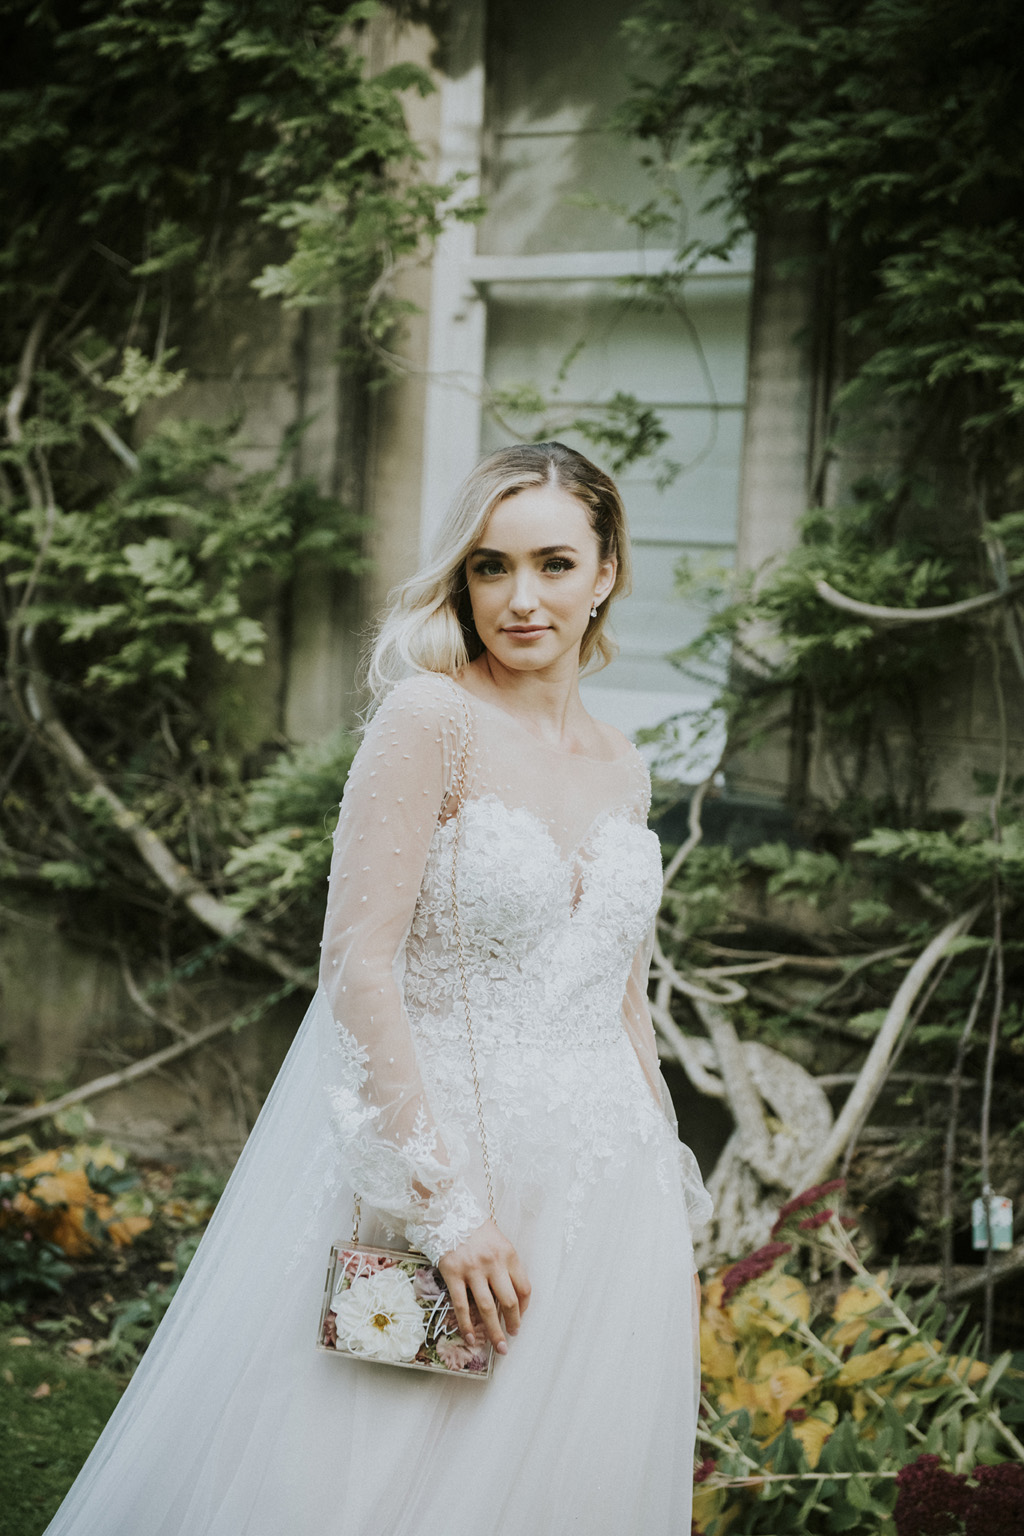 modern elegant refined wedding styling from Derbyshire, image credit Key Reflections Photography